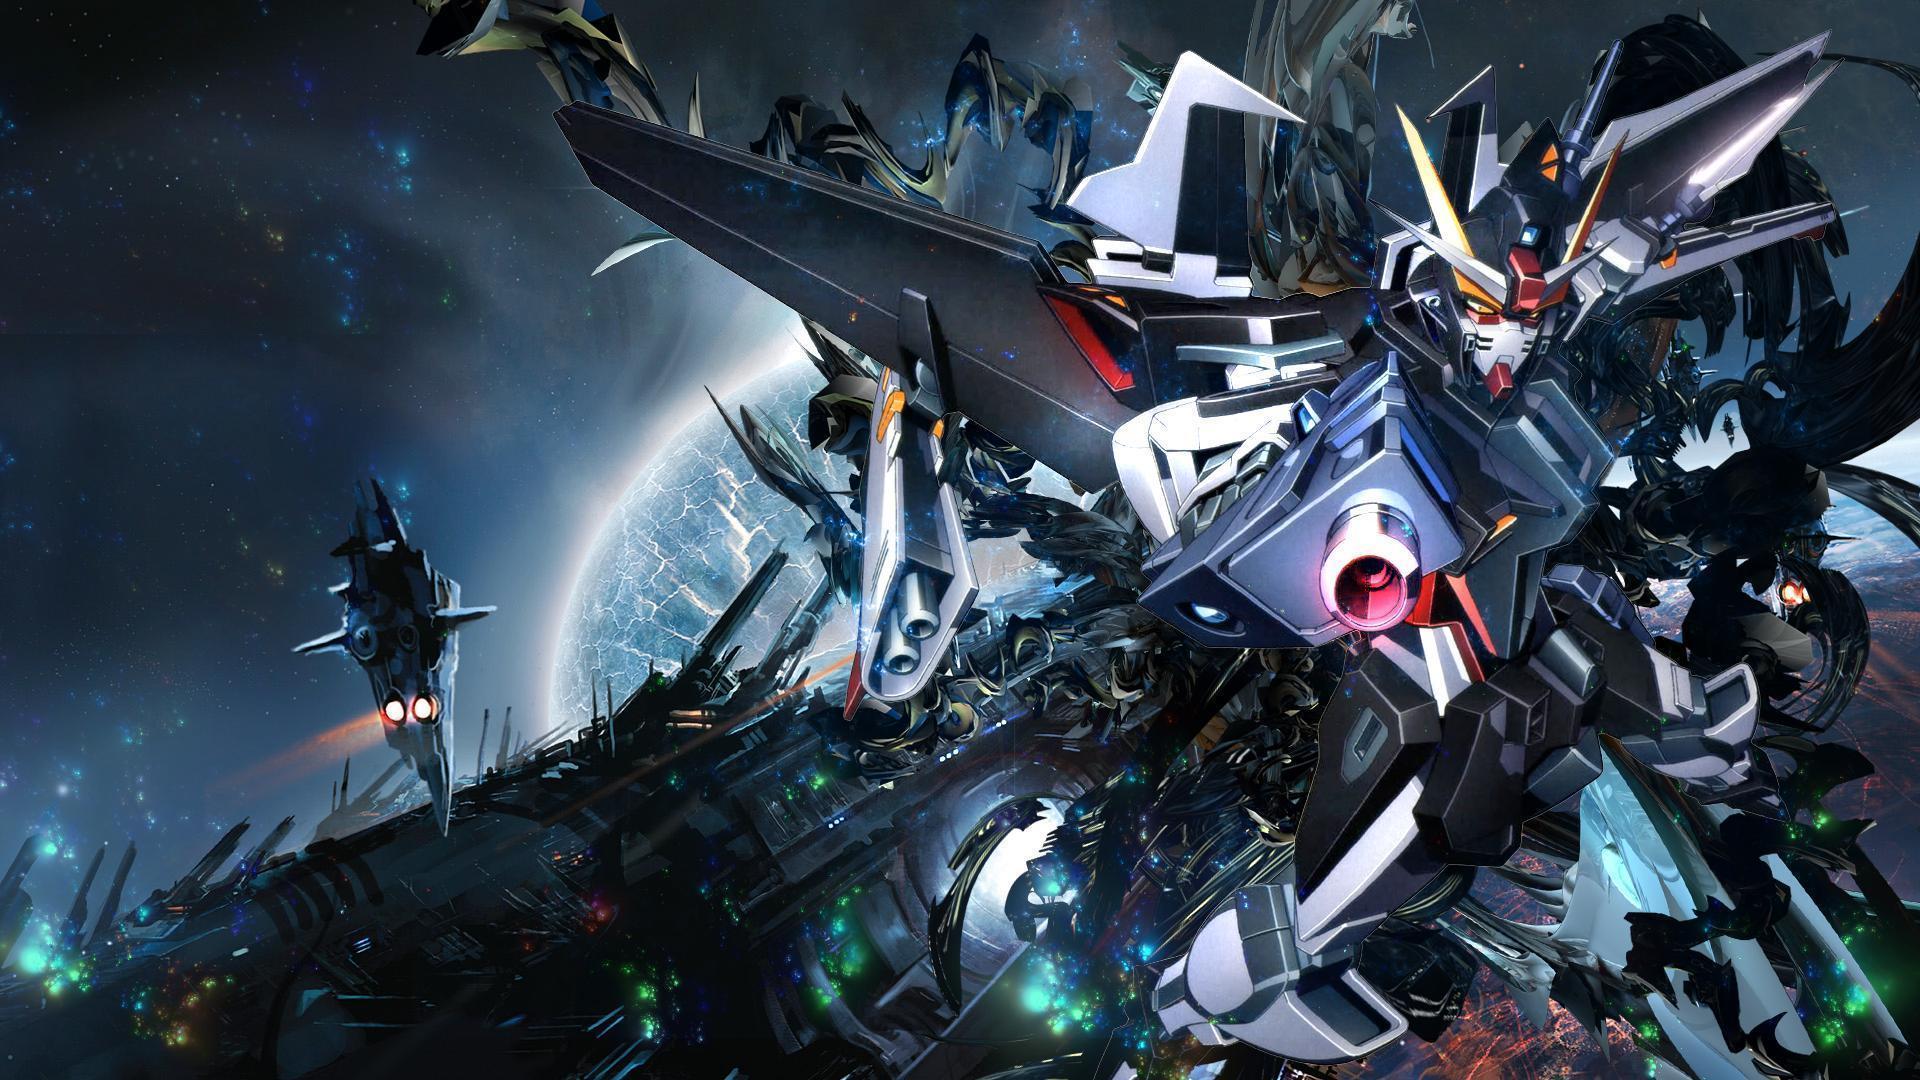 Gundam Backgrounds Free download 